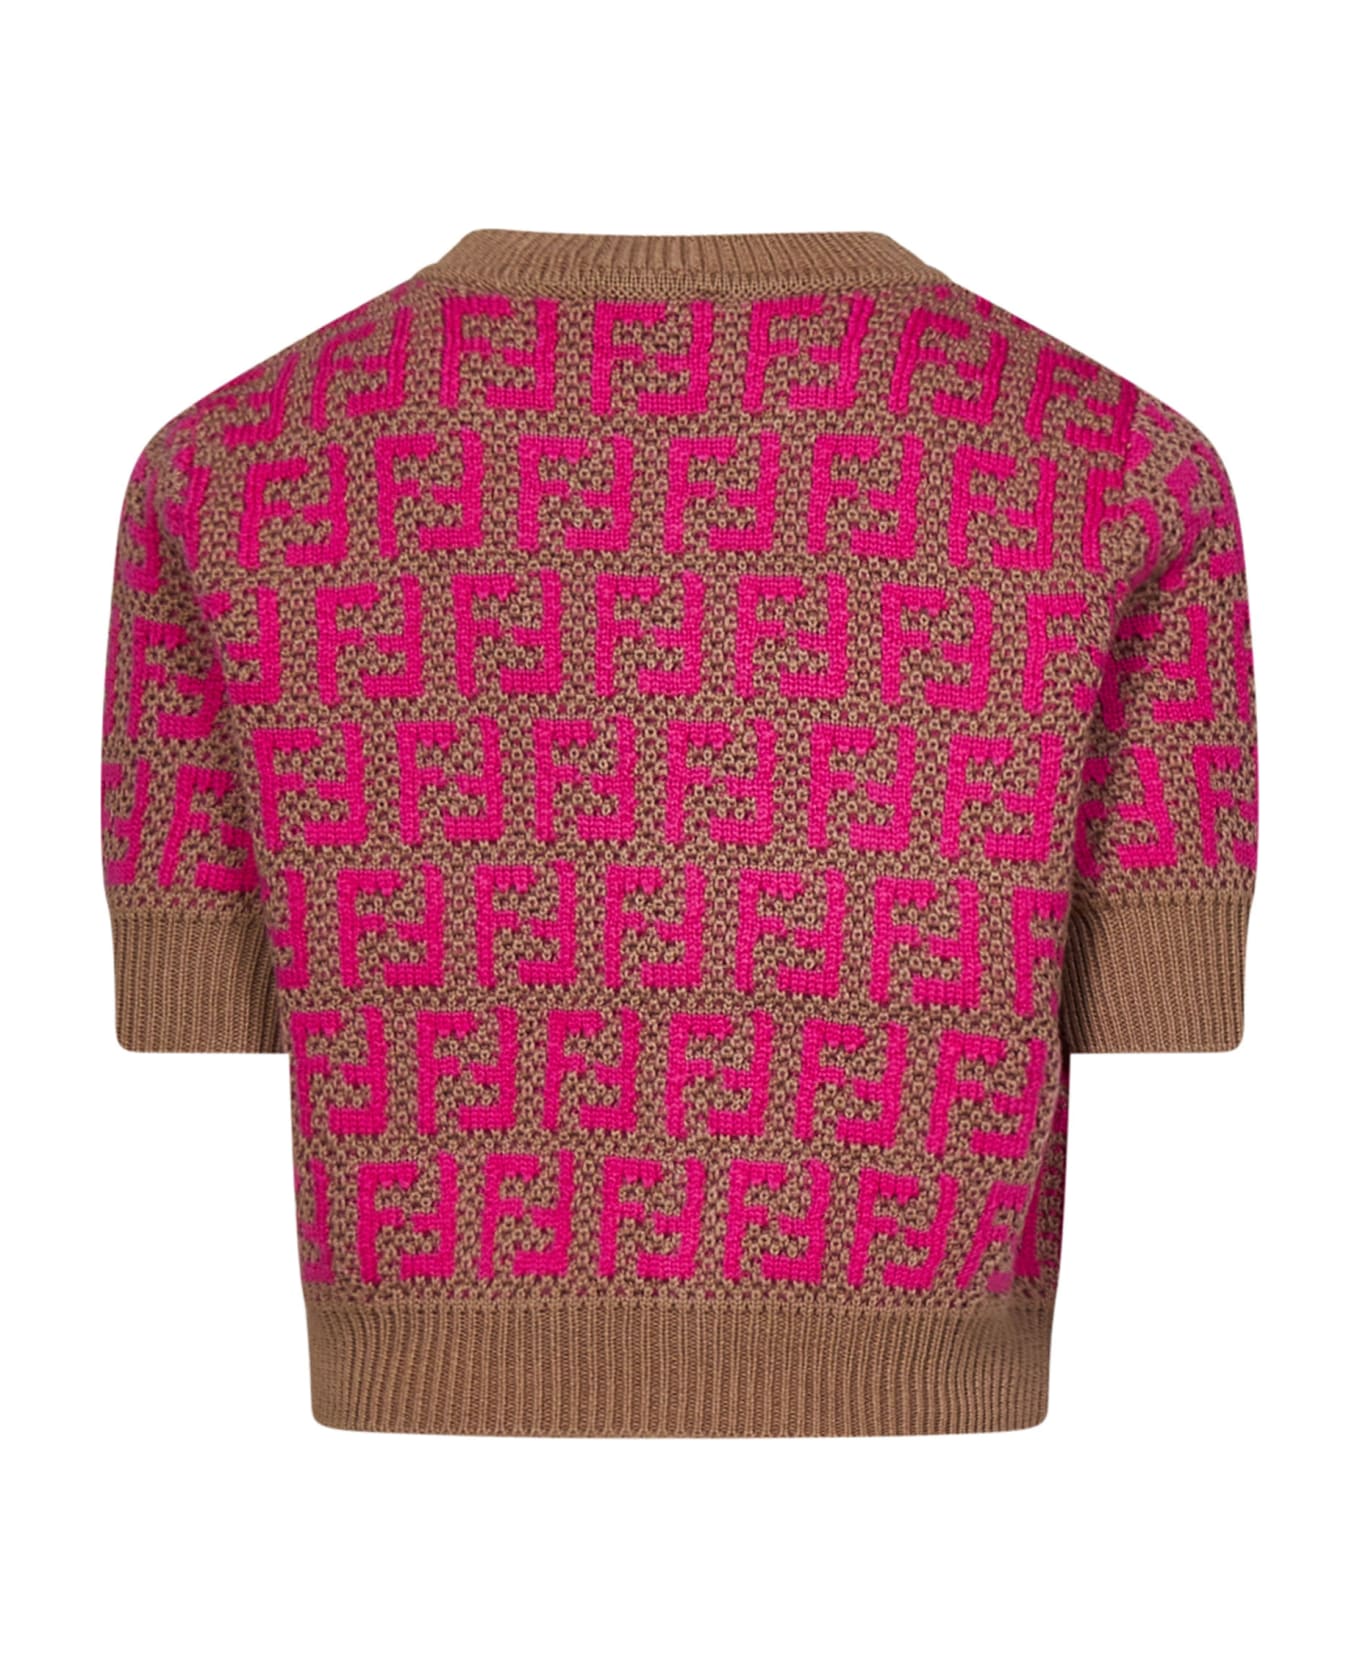 Fendi Kids Sweater - Brown